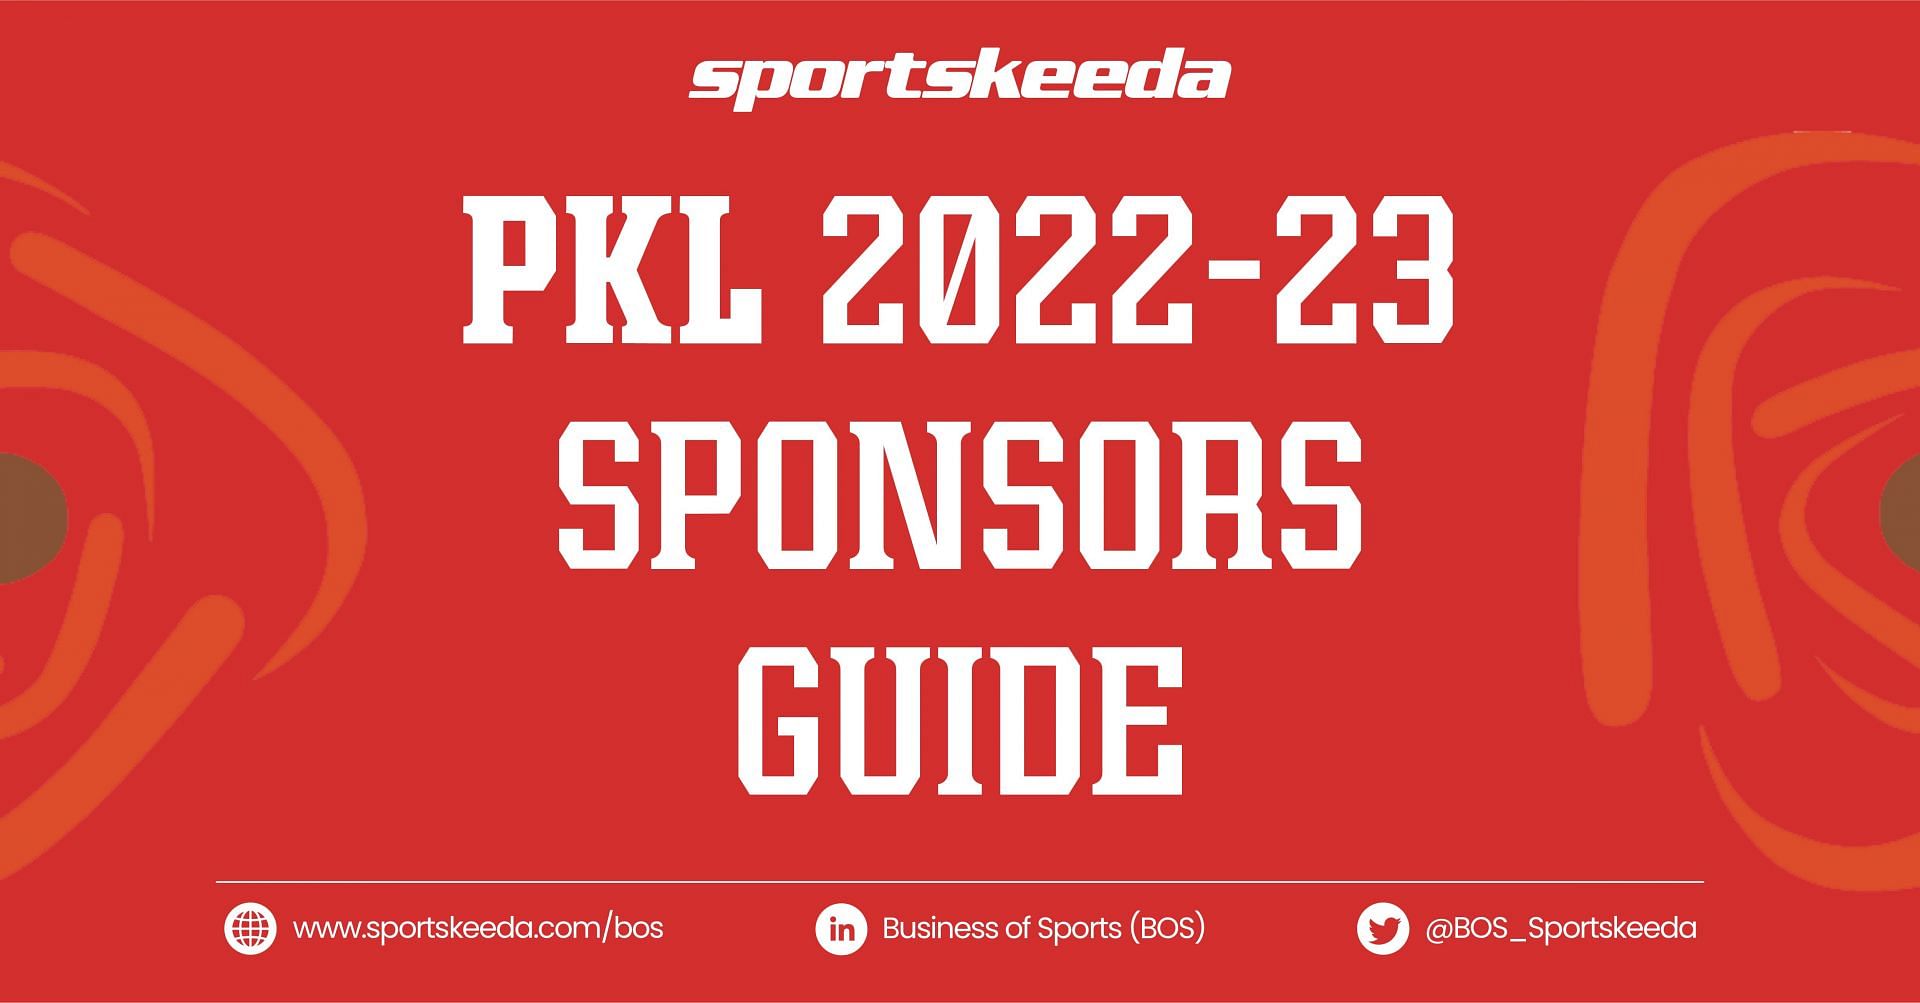 PKL 2022-23 Sponsors Guide Source: Sportskeeda